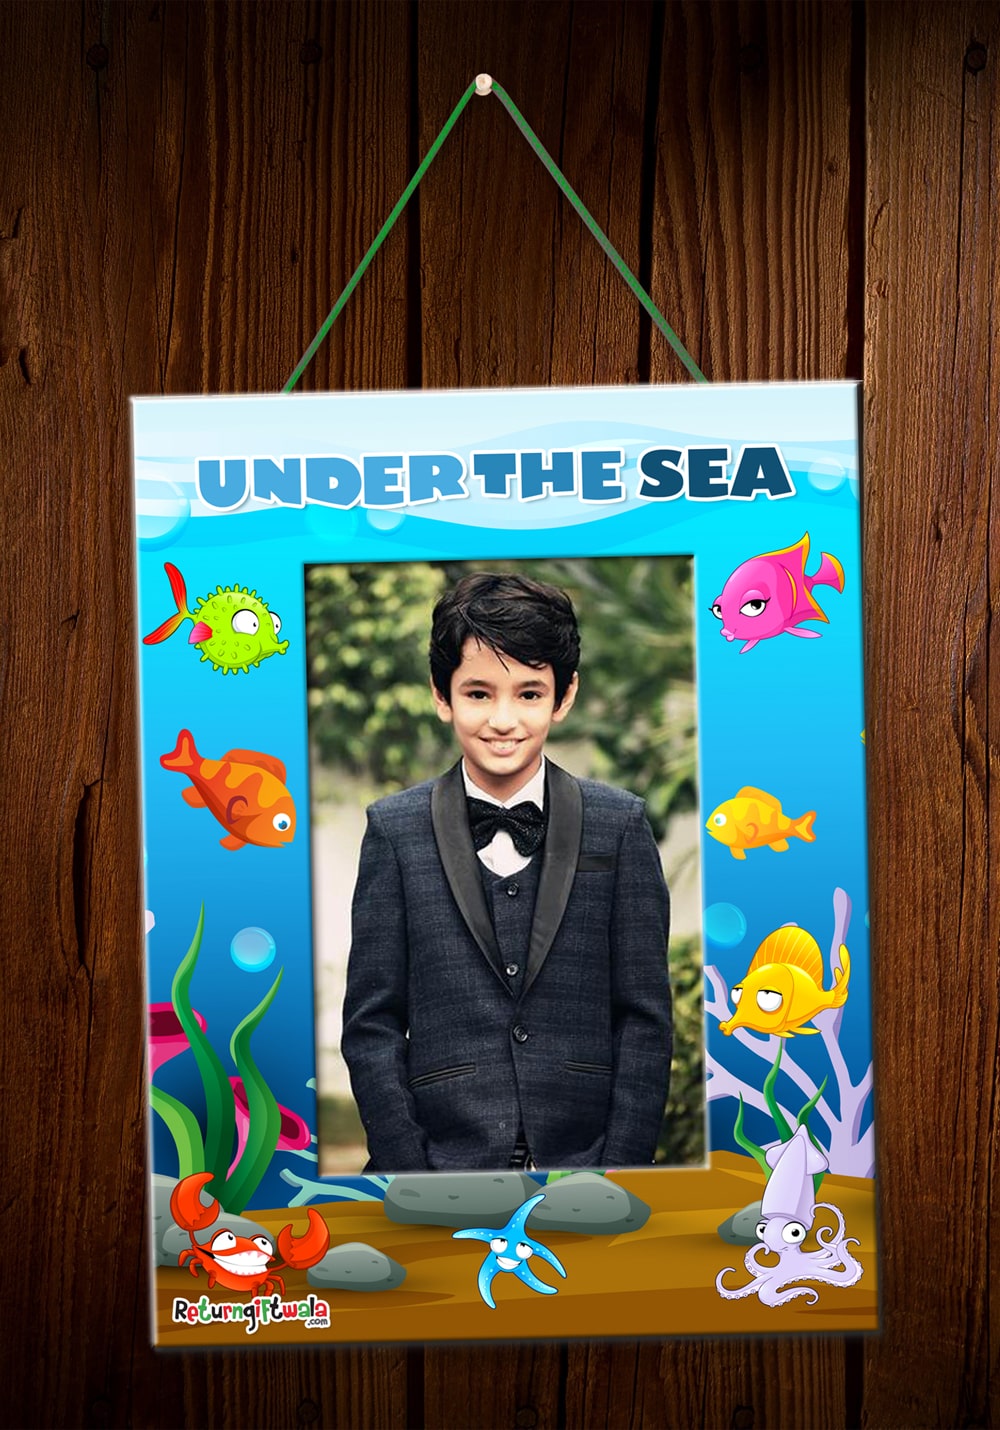 Under the sea theme birthday return gift for kids